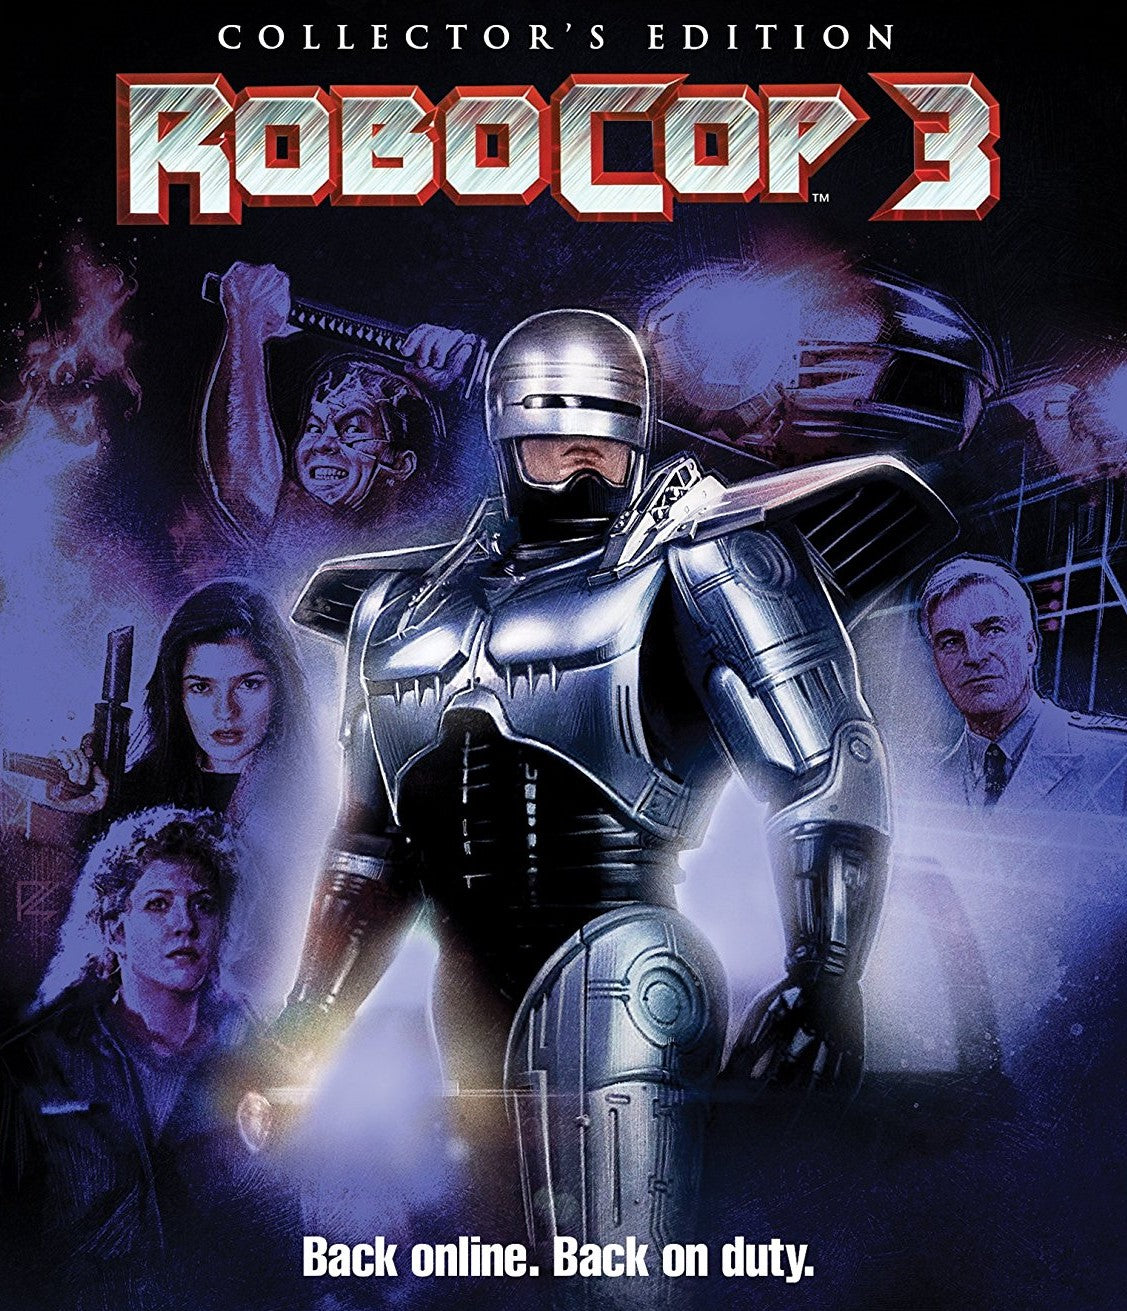 Robocop 3 (Collectors Edition) Blu-Ray Blu-Ray